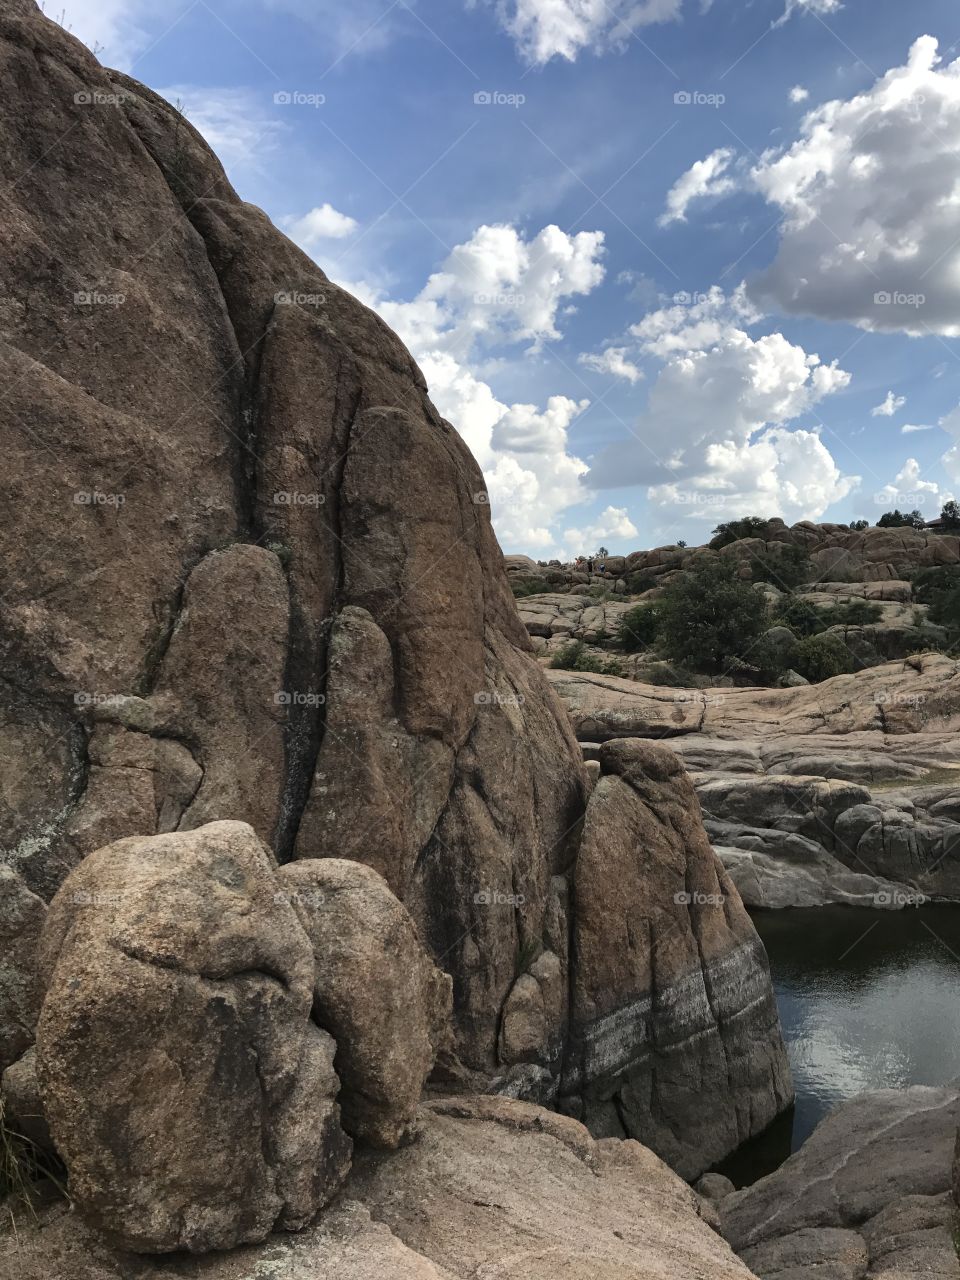 Otherworldly rockscape in Prescott, Arizona. 